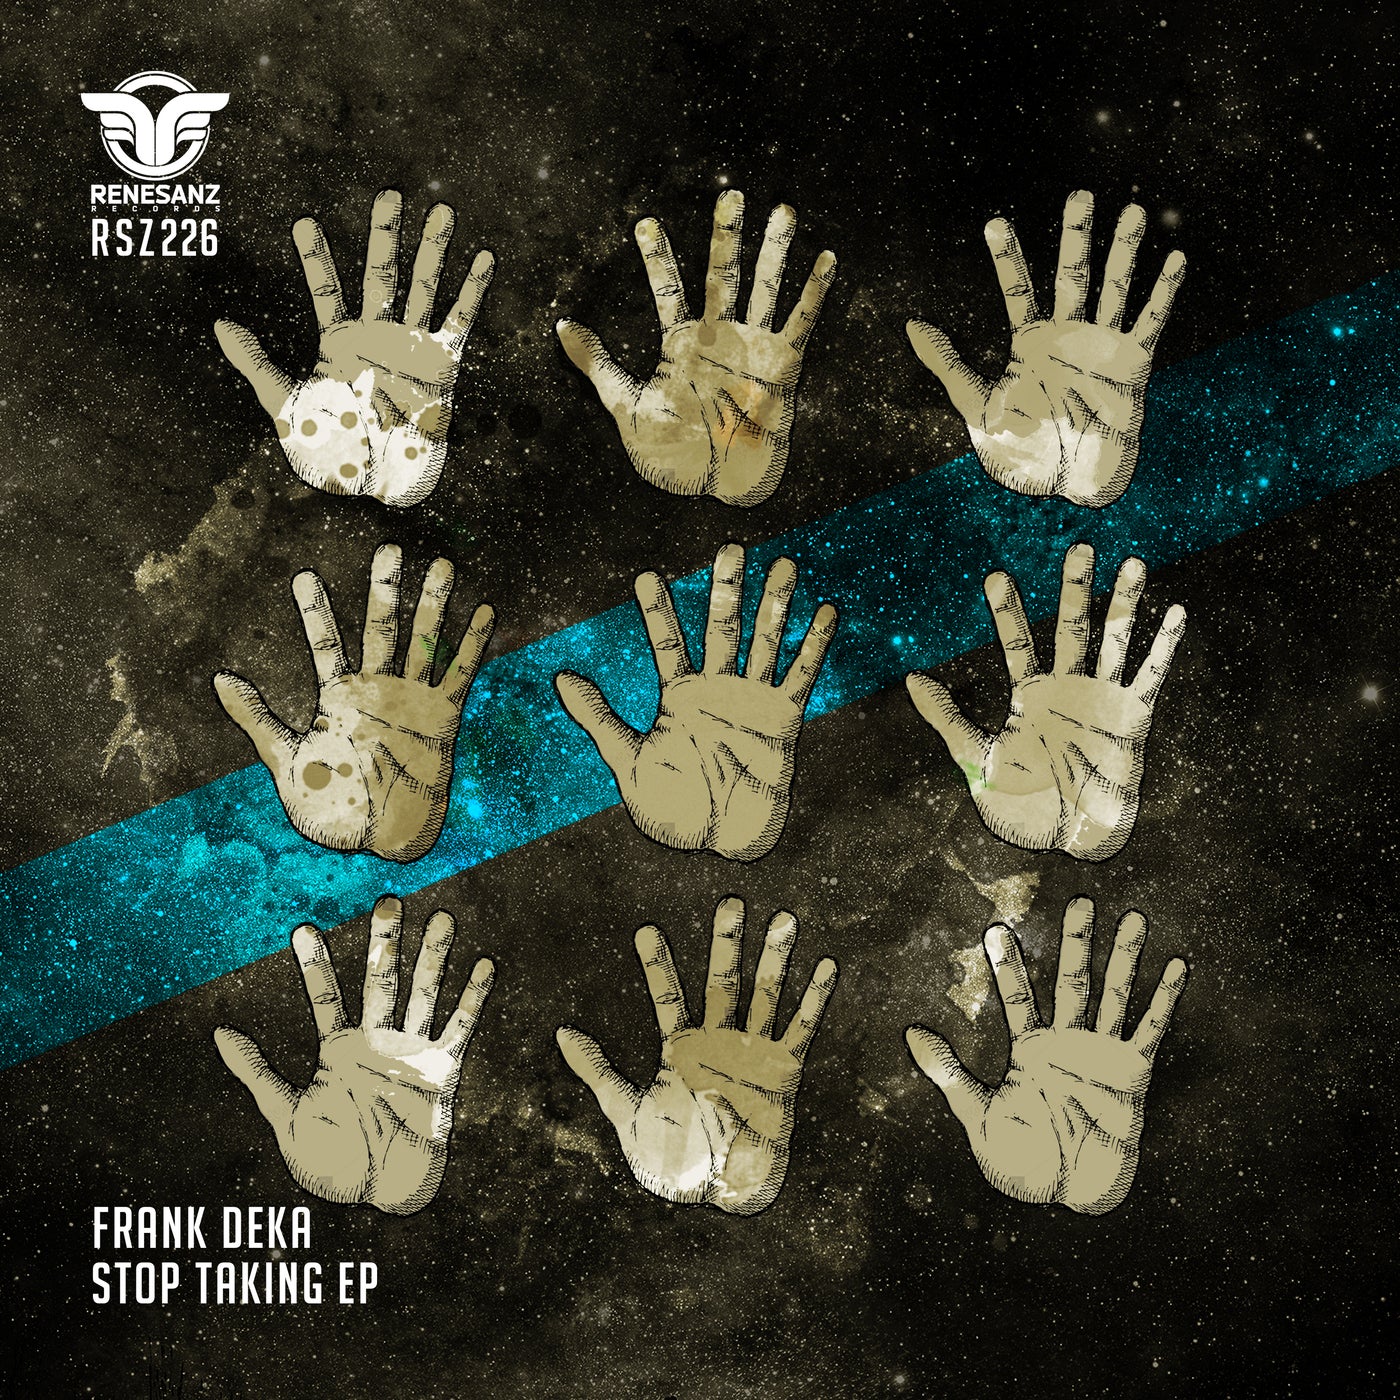 Frank Deka – Stop Taking EP [RSZ226]